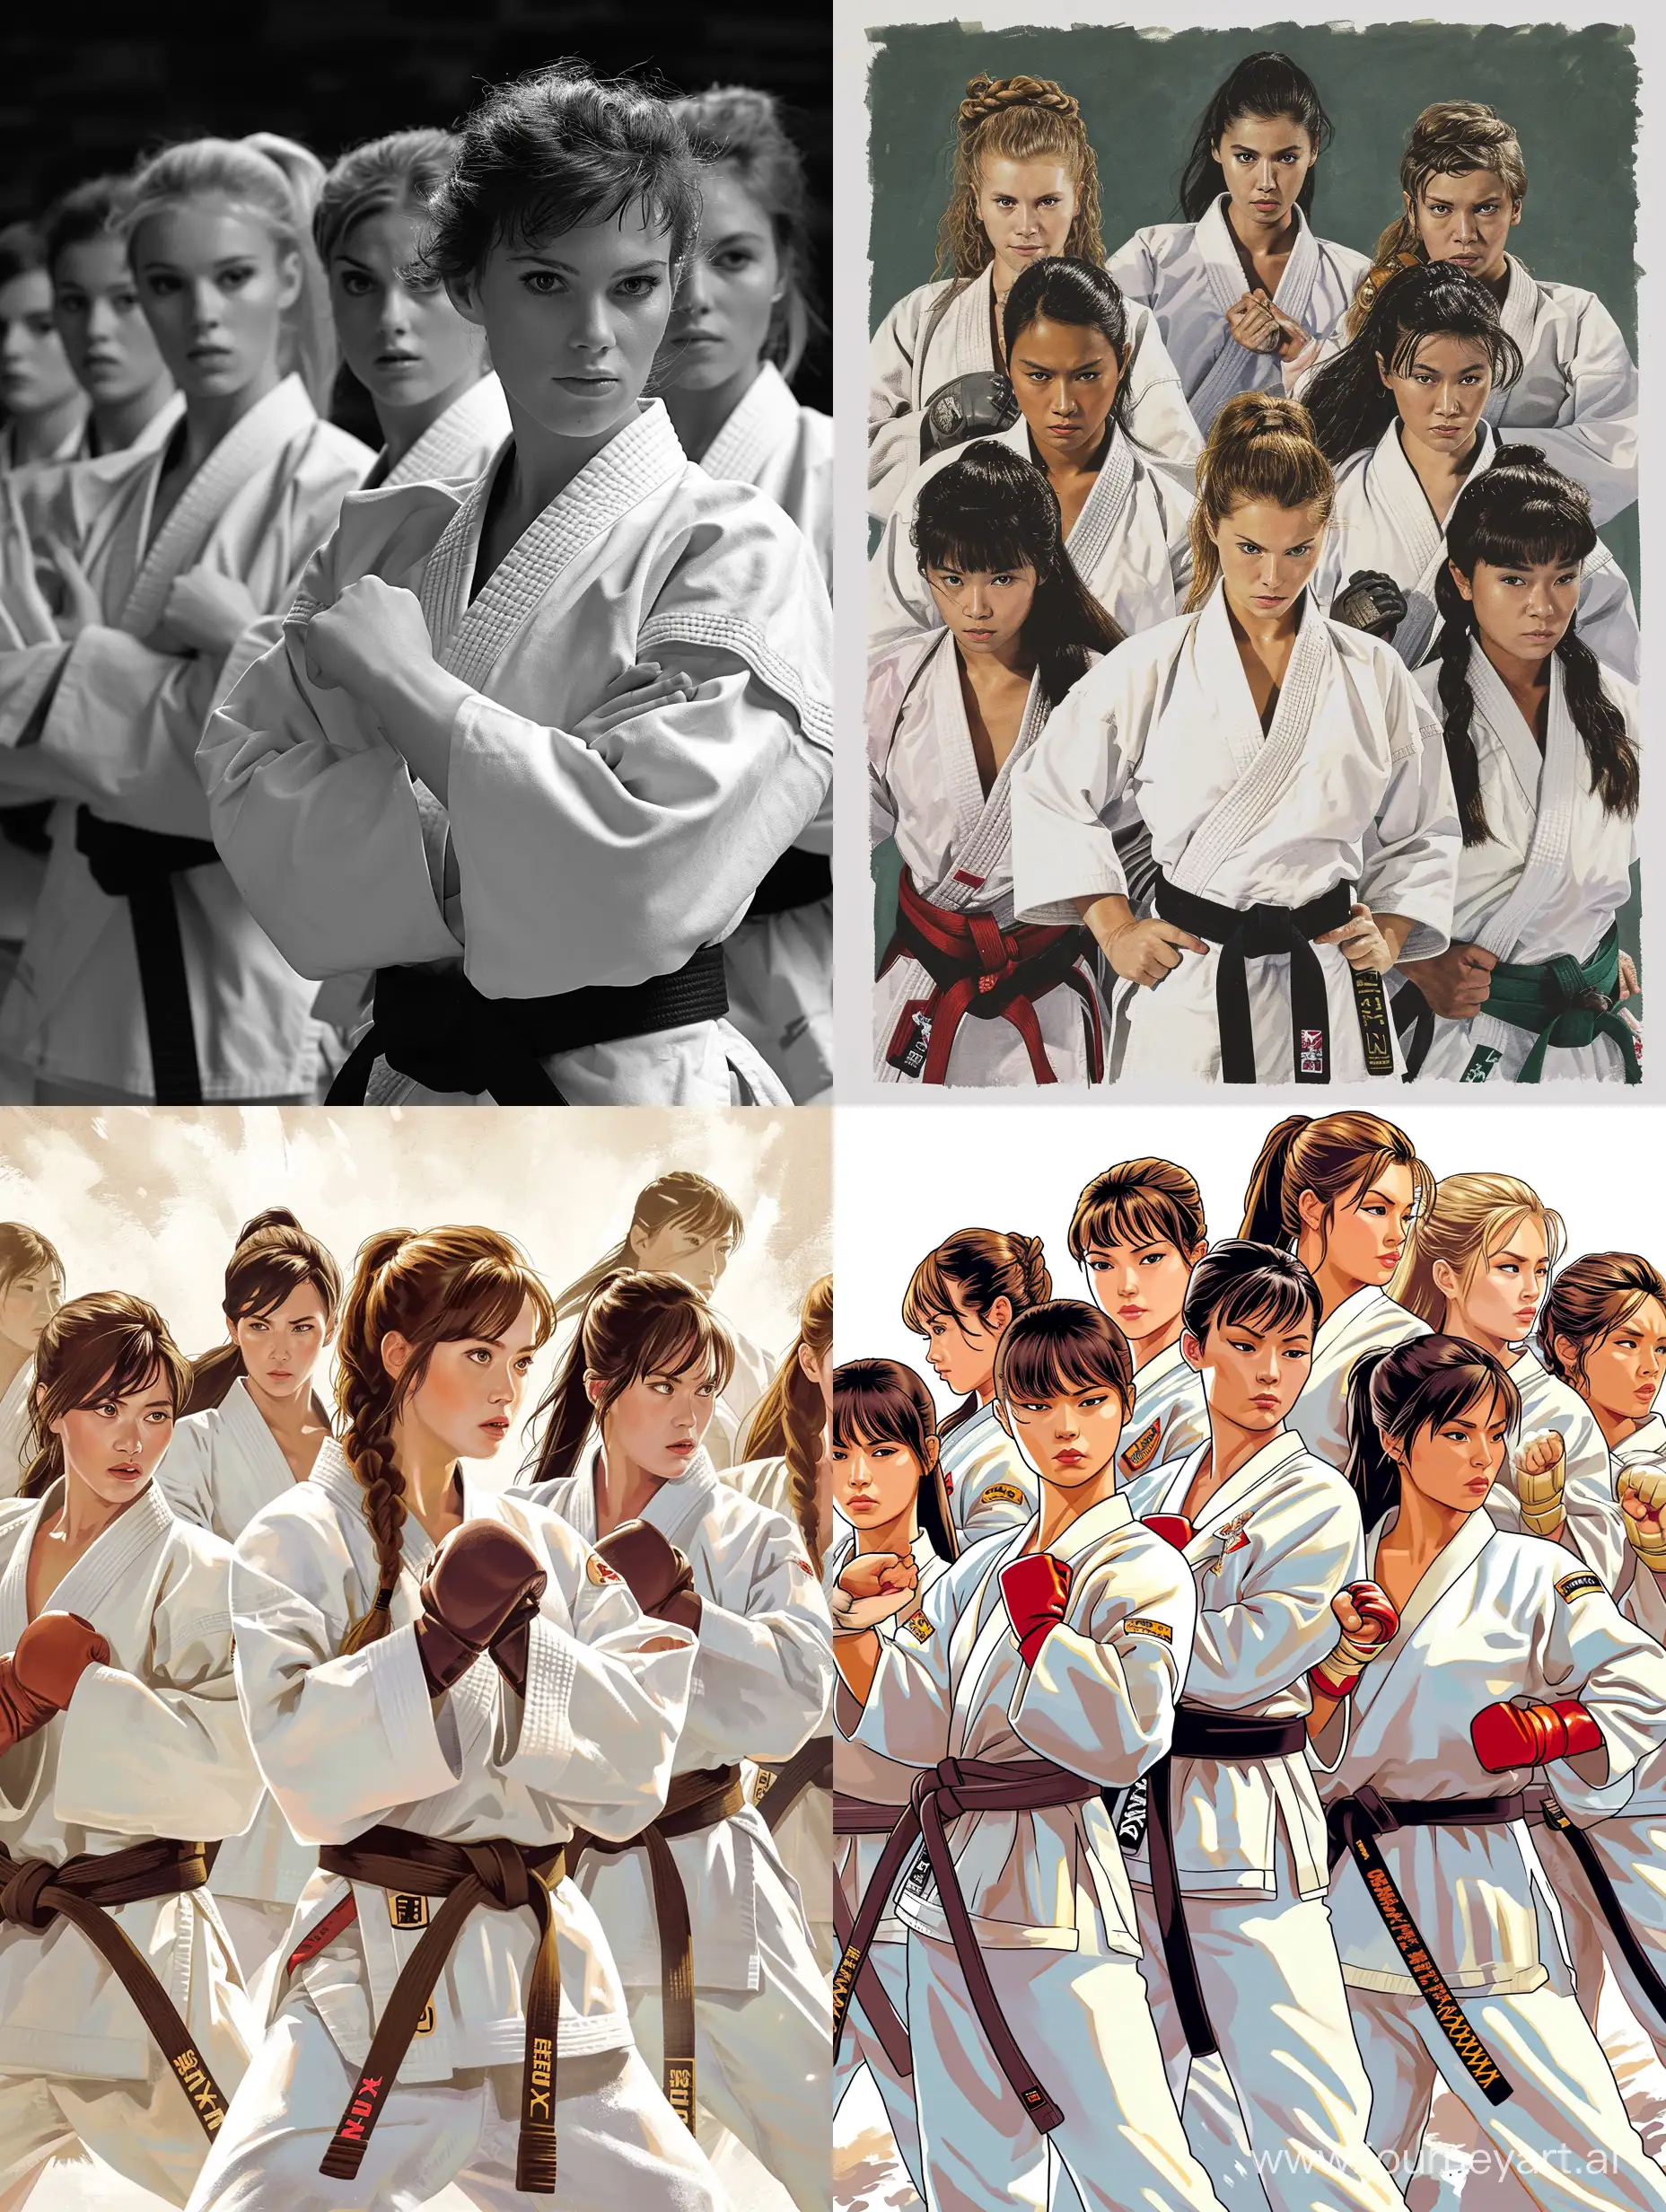 Empowered-Female-Karate-Group-Displaying-Martial-Arts-Skills